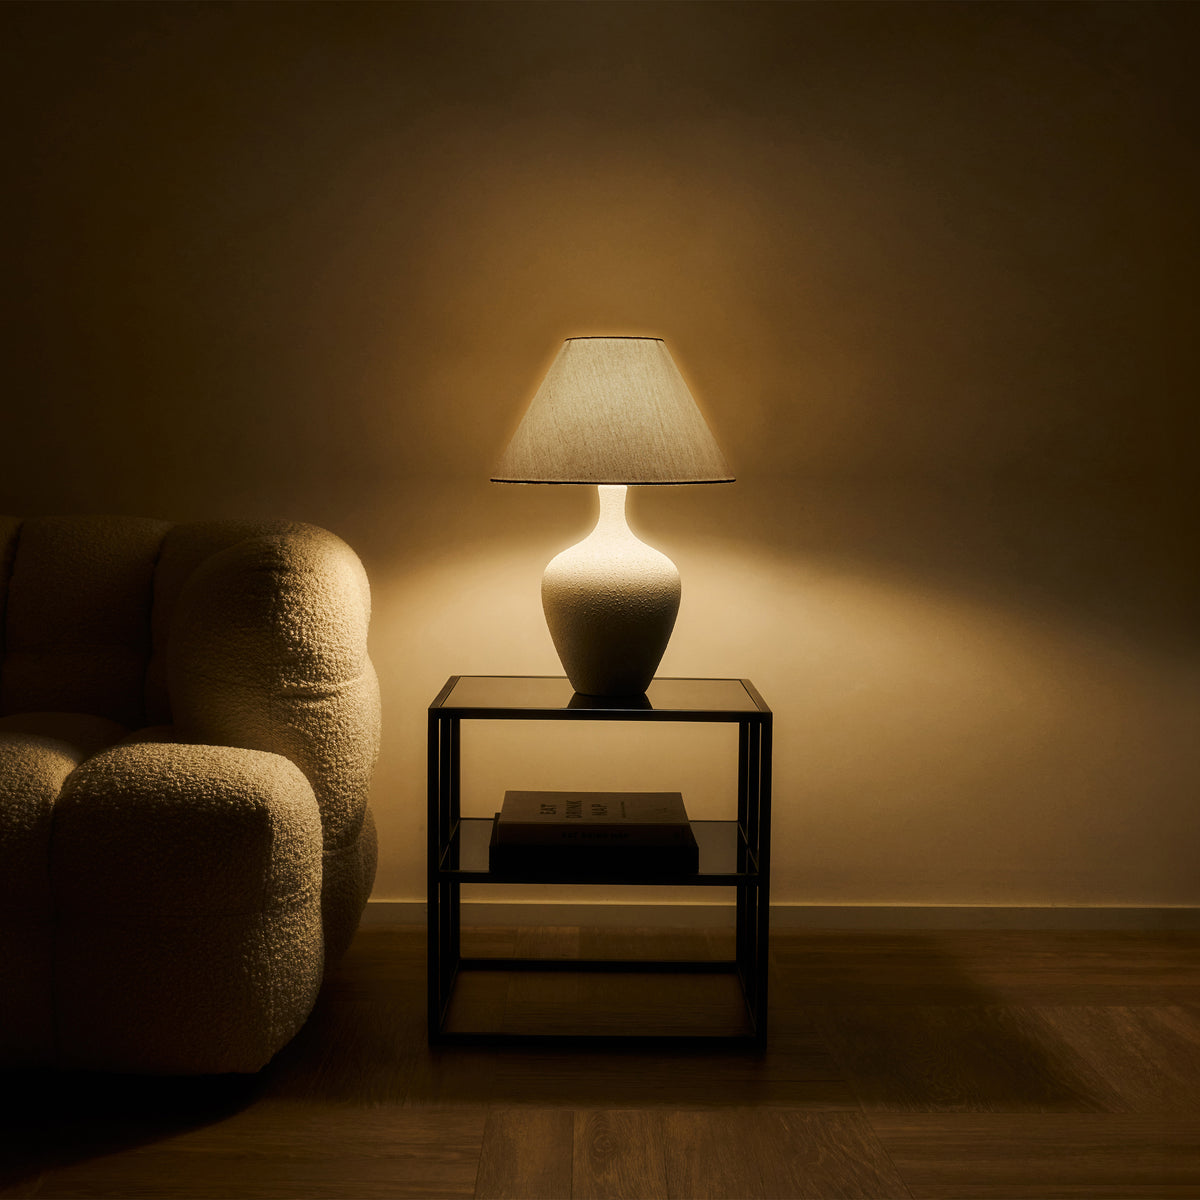 Textured Ceramic Based Table Lamp Beige Shade emitting warm light